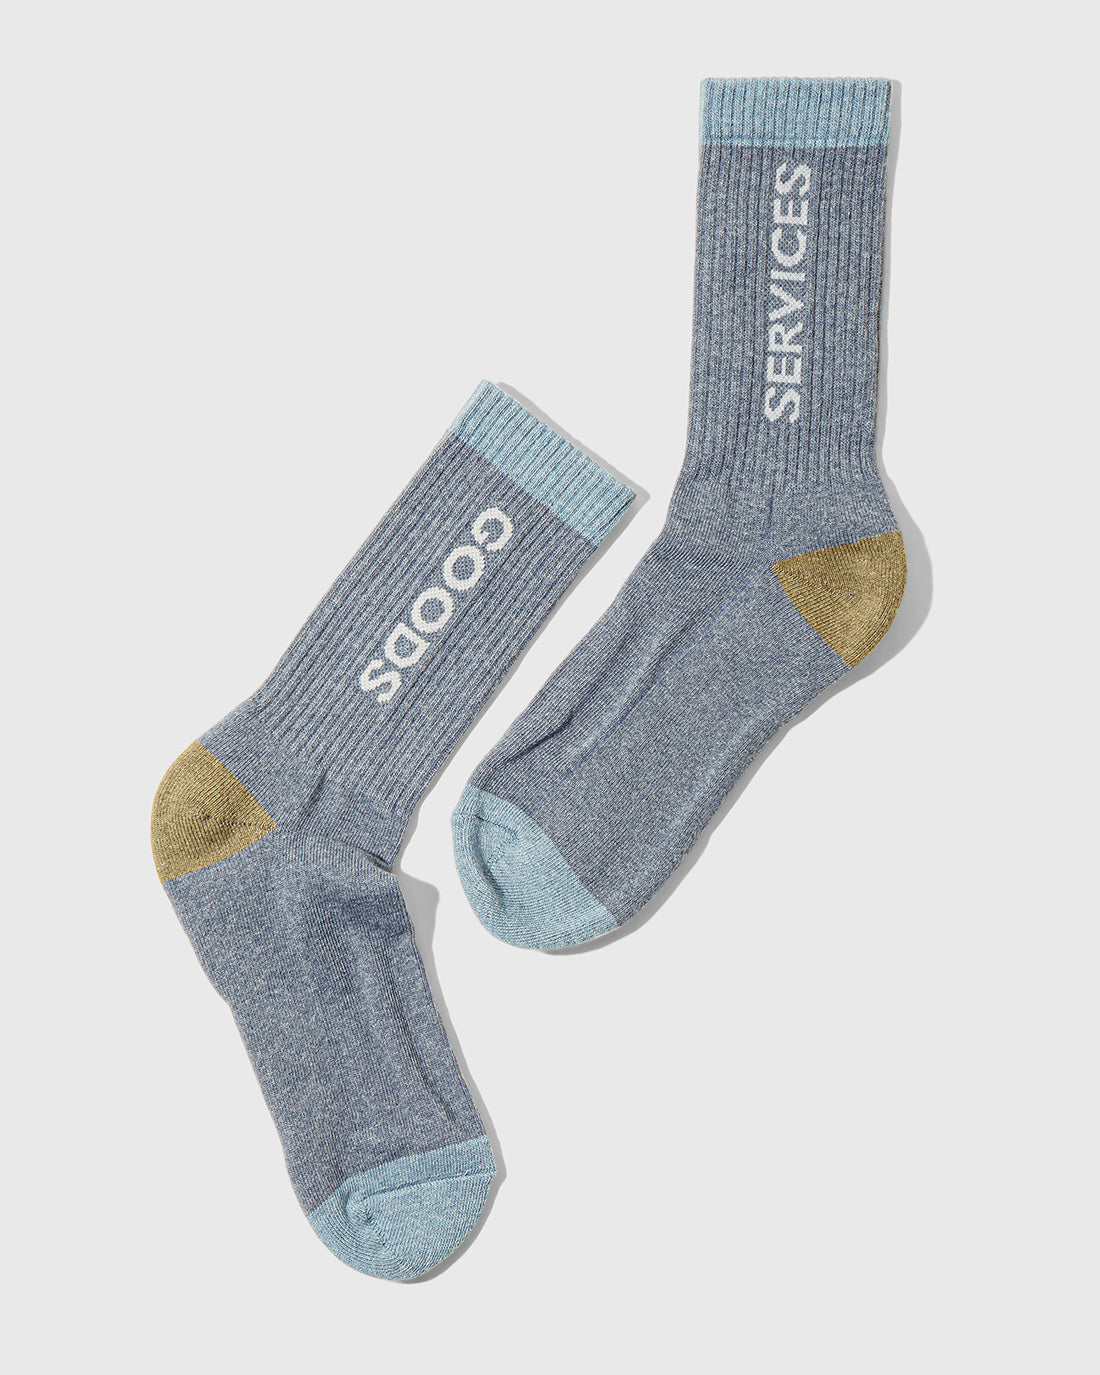 Goods & Services Socks